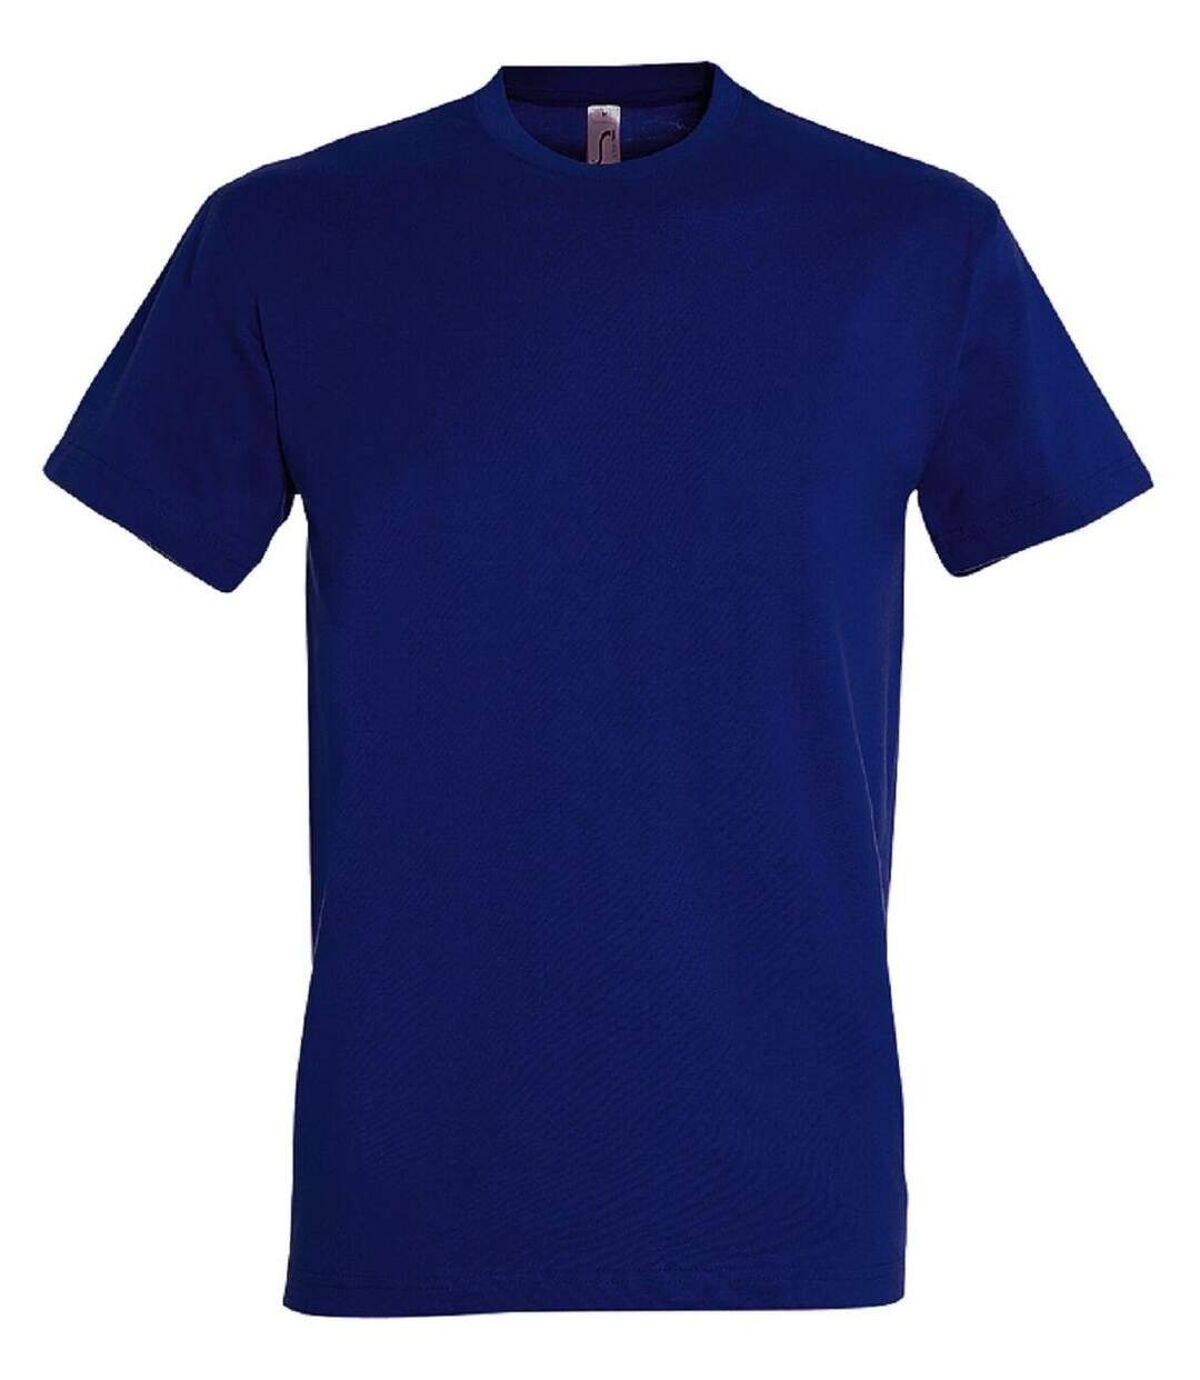 T-shirt manches courtes - Mixte - 11500 - bleu outremer